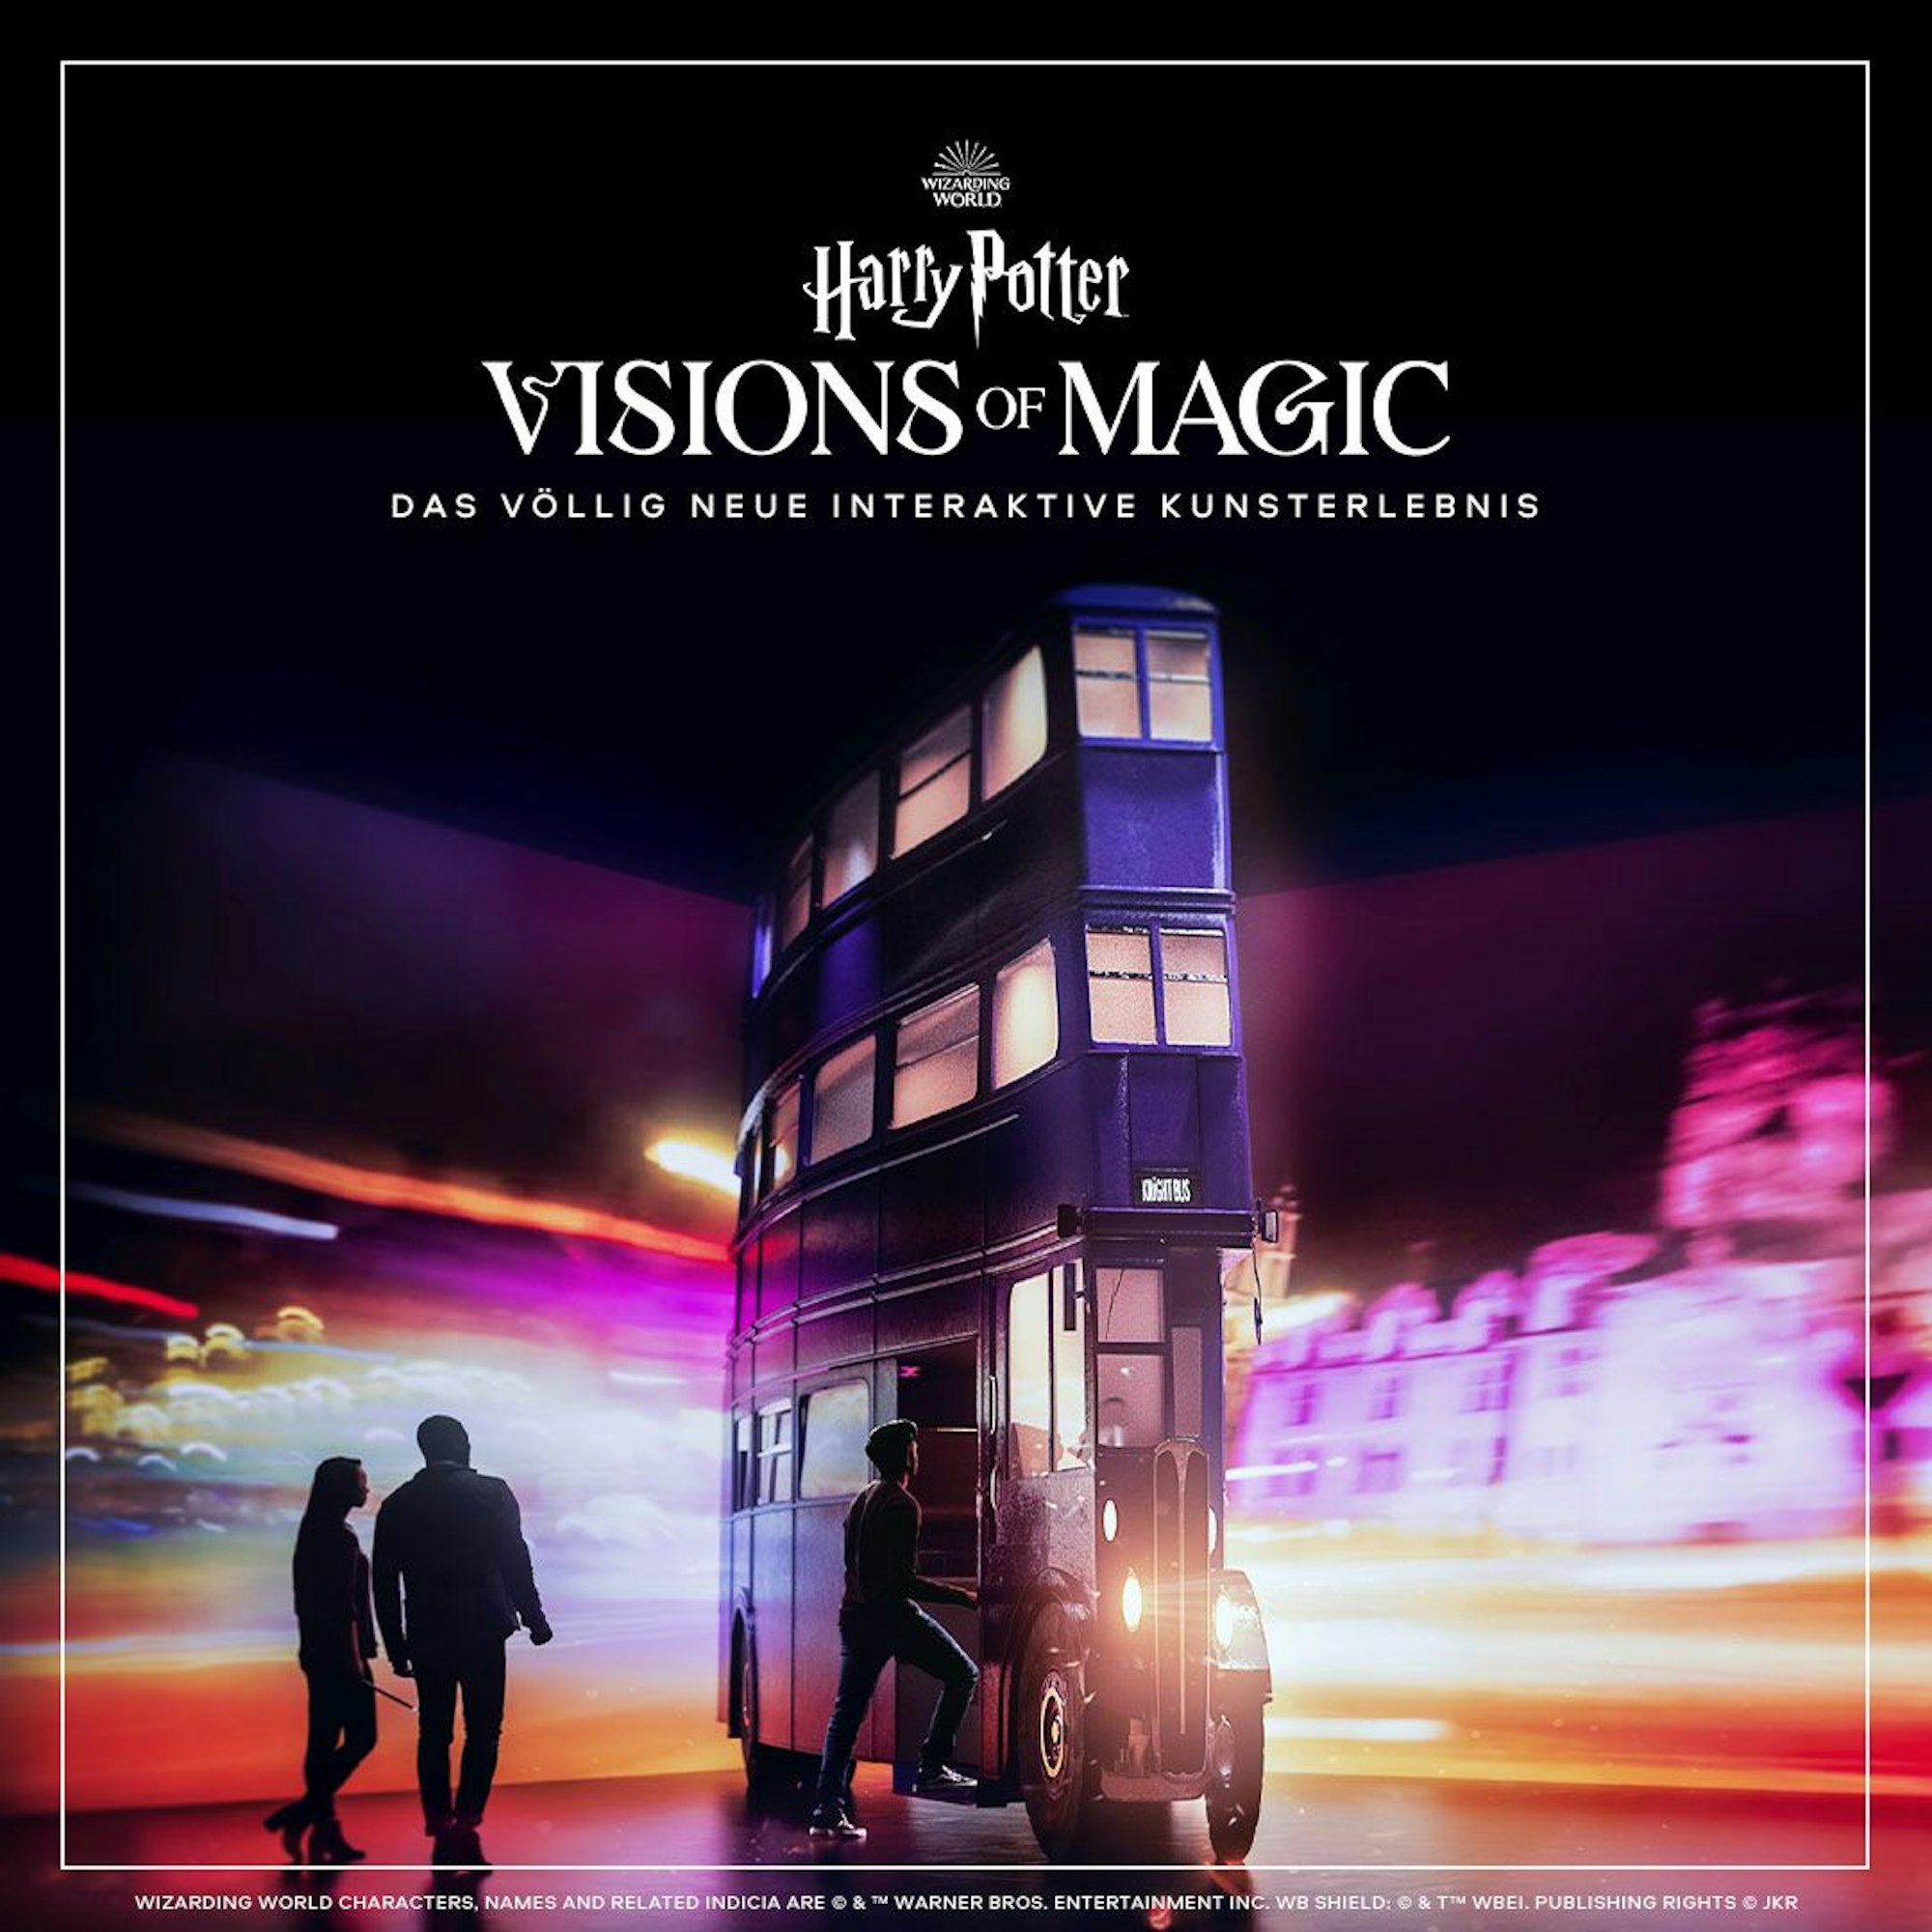 Harry Potter – Visions of Magic bild aus der Ausstellung.